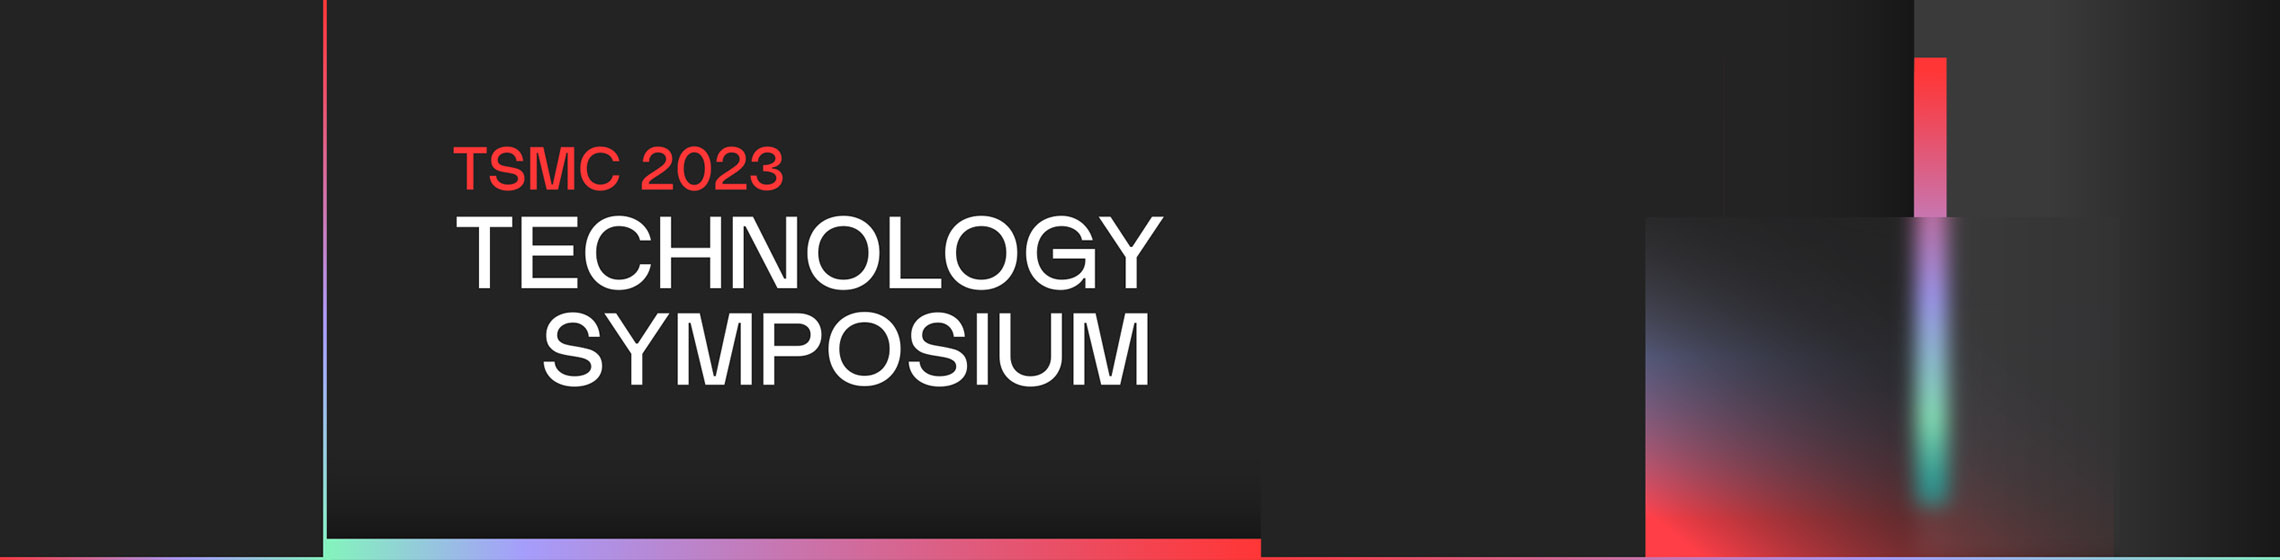 2023 TSMC Technology Symposium